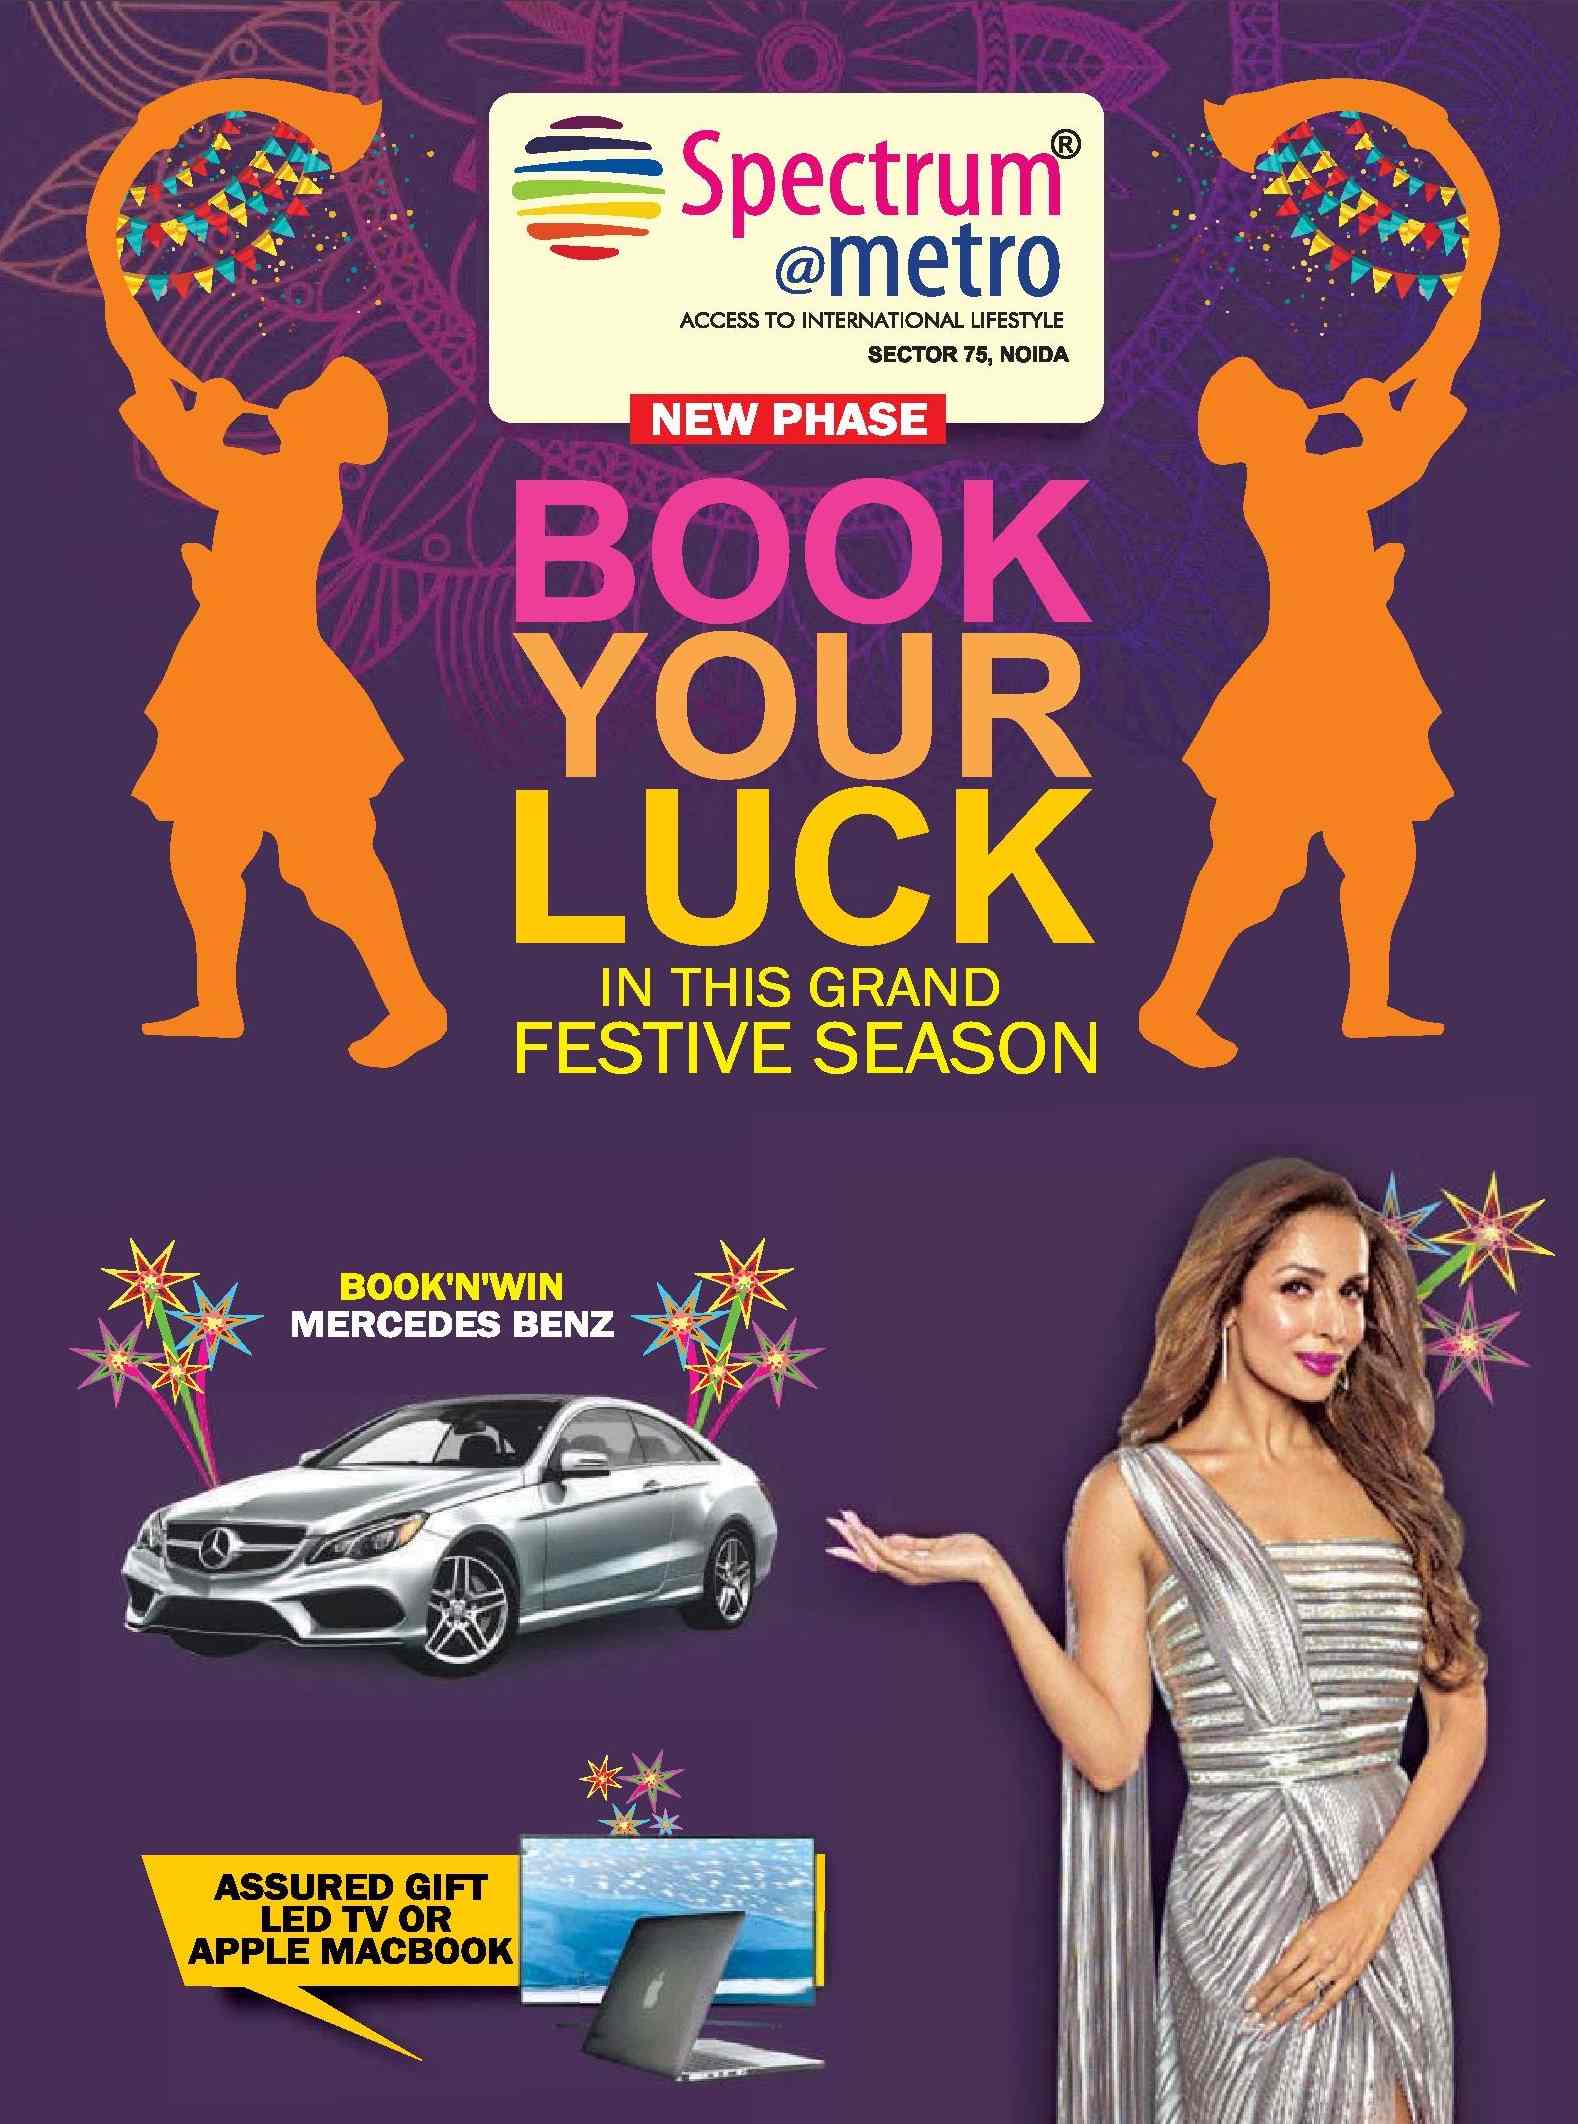 This festive season book & win Mercedes Benz at Blue Spectrum Metro in Noida Update